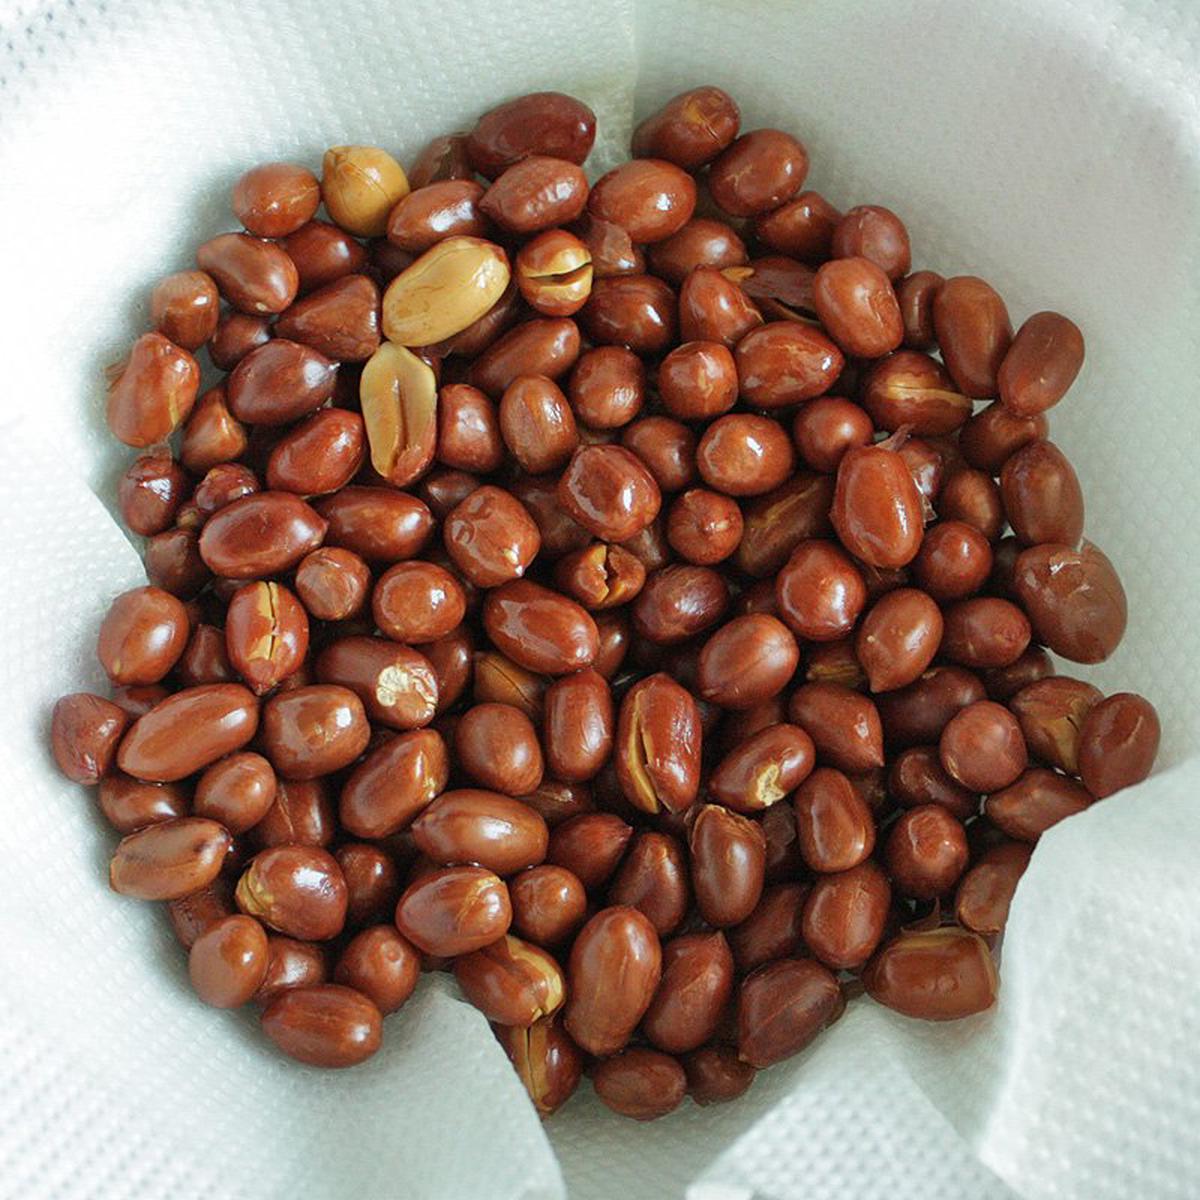 Kacang Tanah Kulit Goreng - Fried Peanut